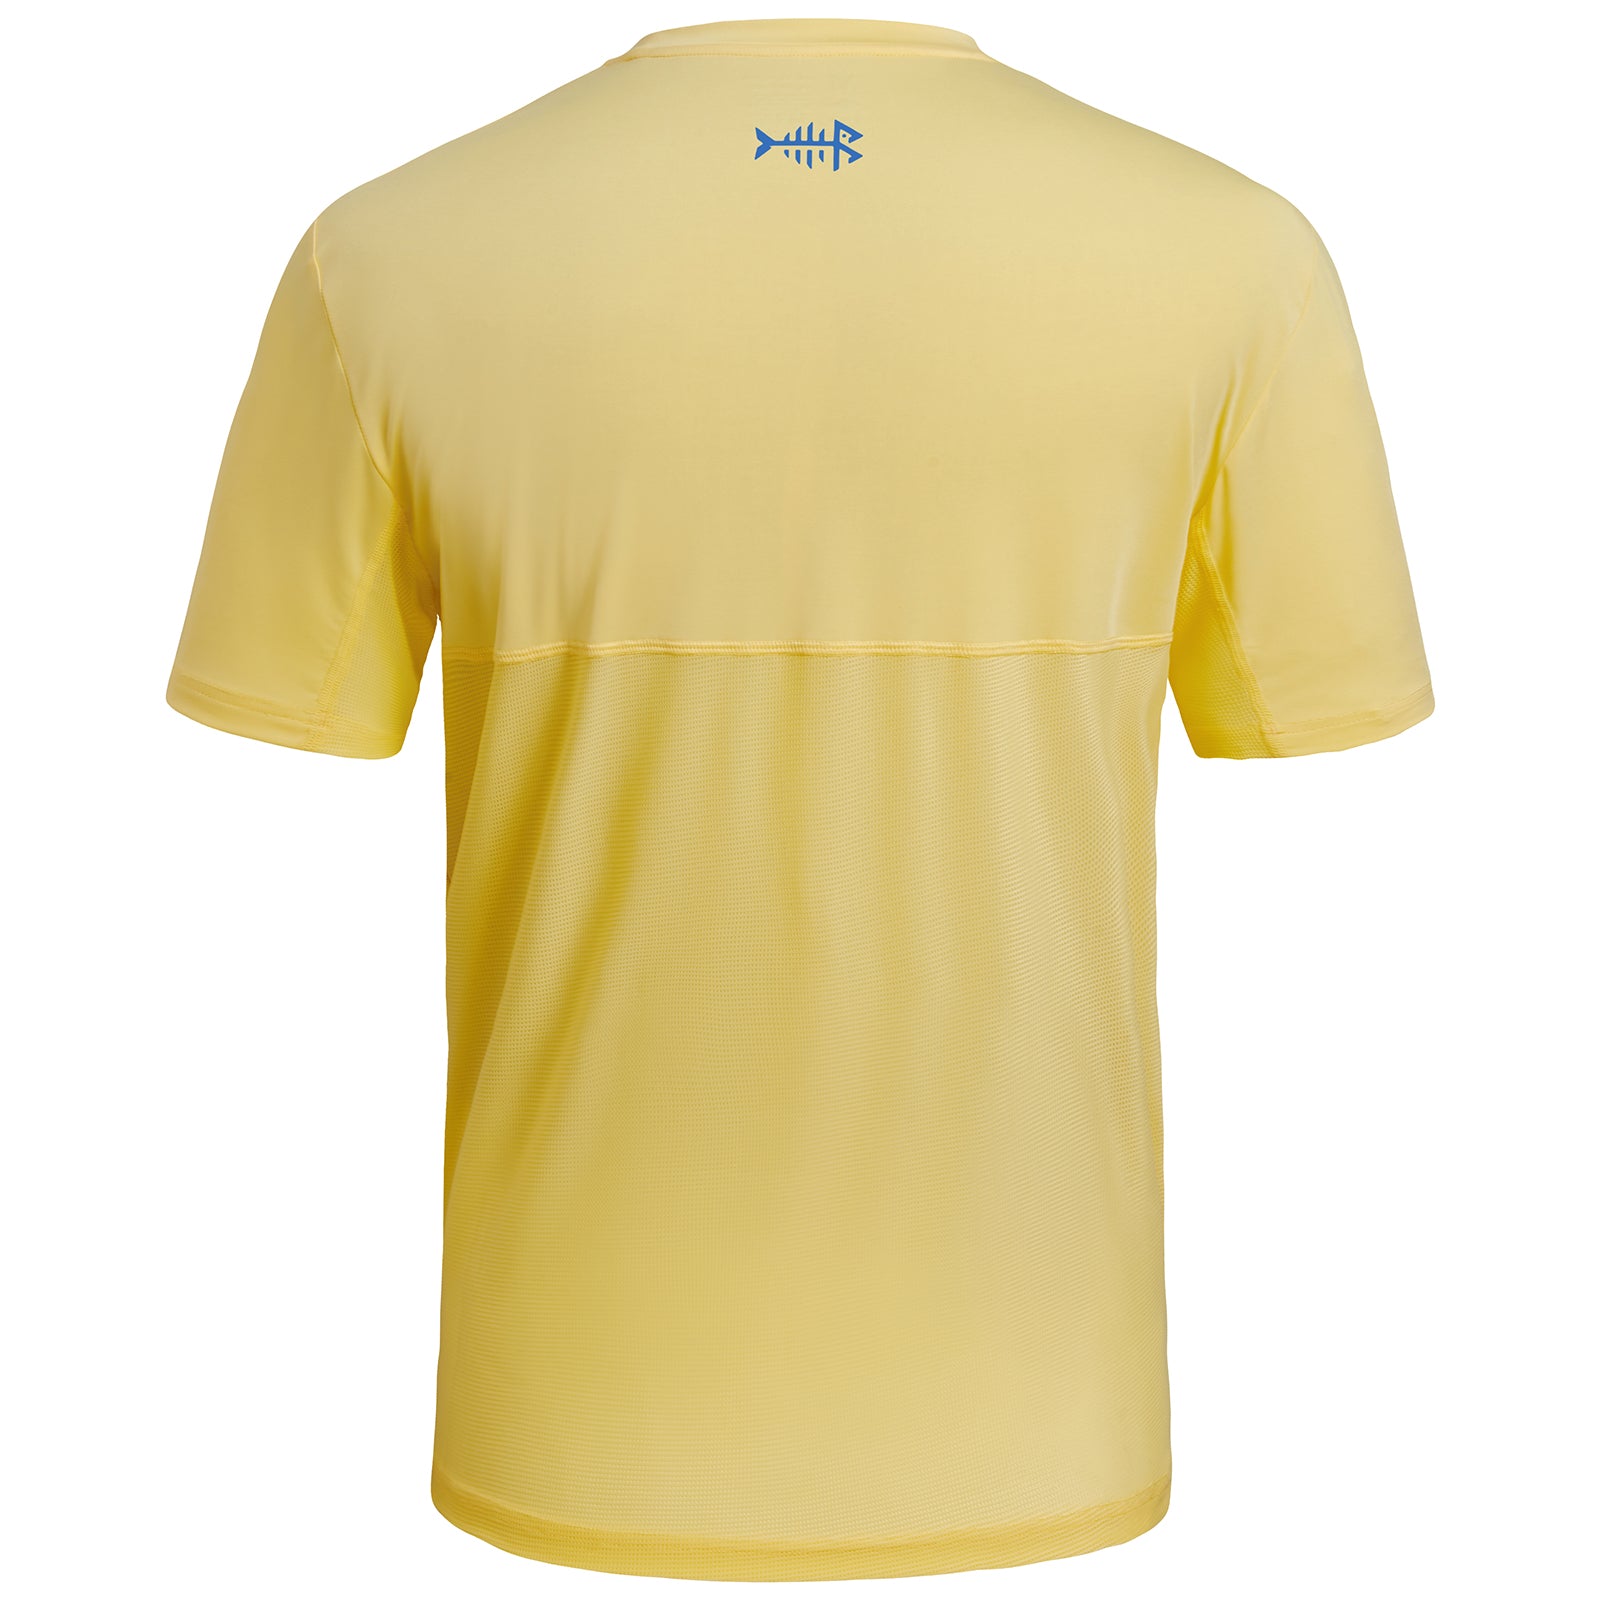 Fishing T-shirt Men Short Sleeve Shirts Uv Sun Protection Shirt Upf 50+  Running Golf Fishing Clothing Quick Dry Camisa De Pesca - Fishing Jerseys -  AliExpress